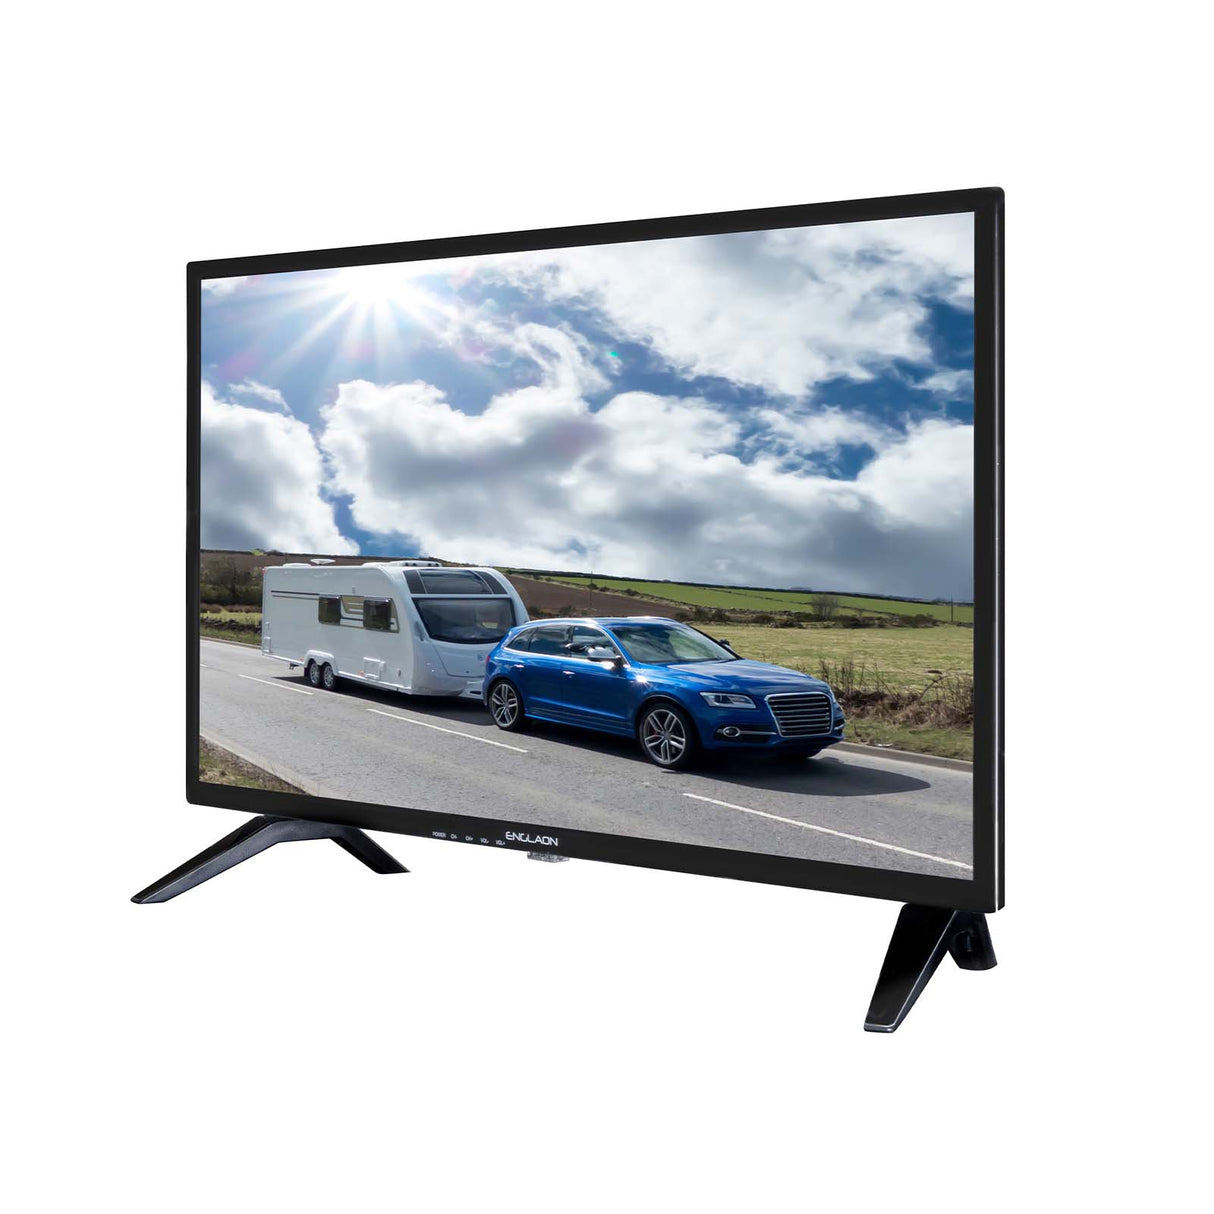 ENGLAON 24″ HD LED 12V TV for Caravans